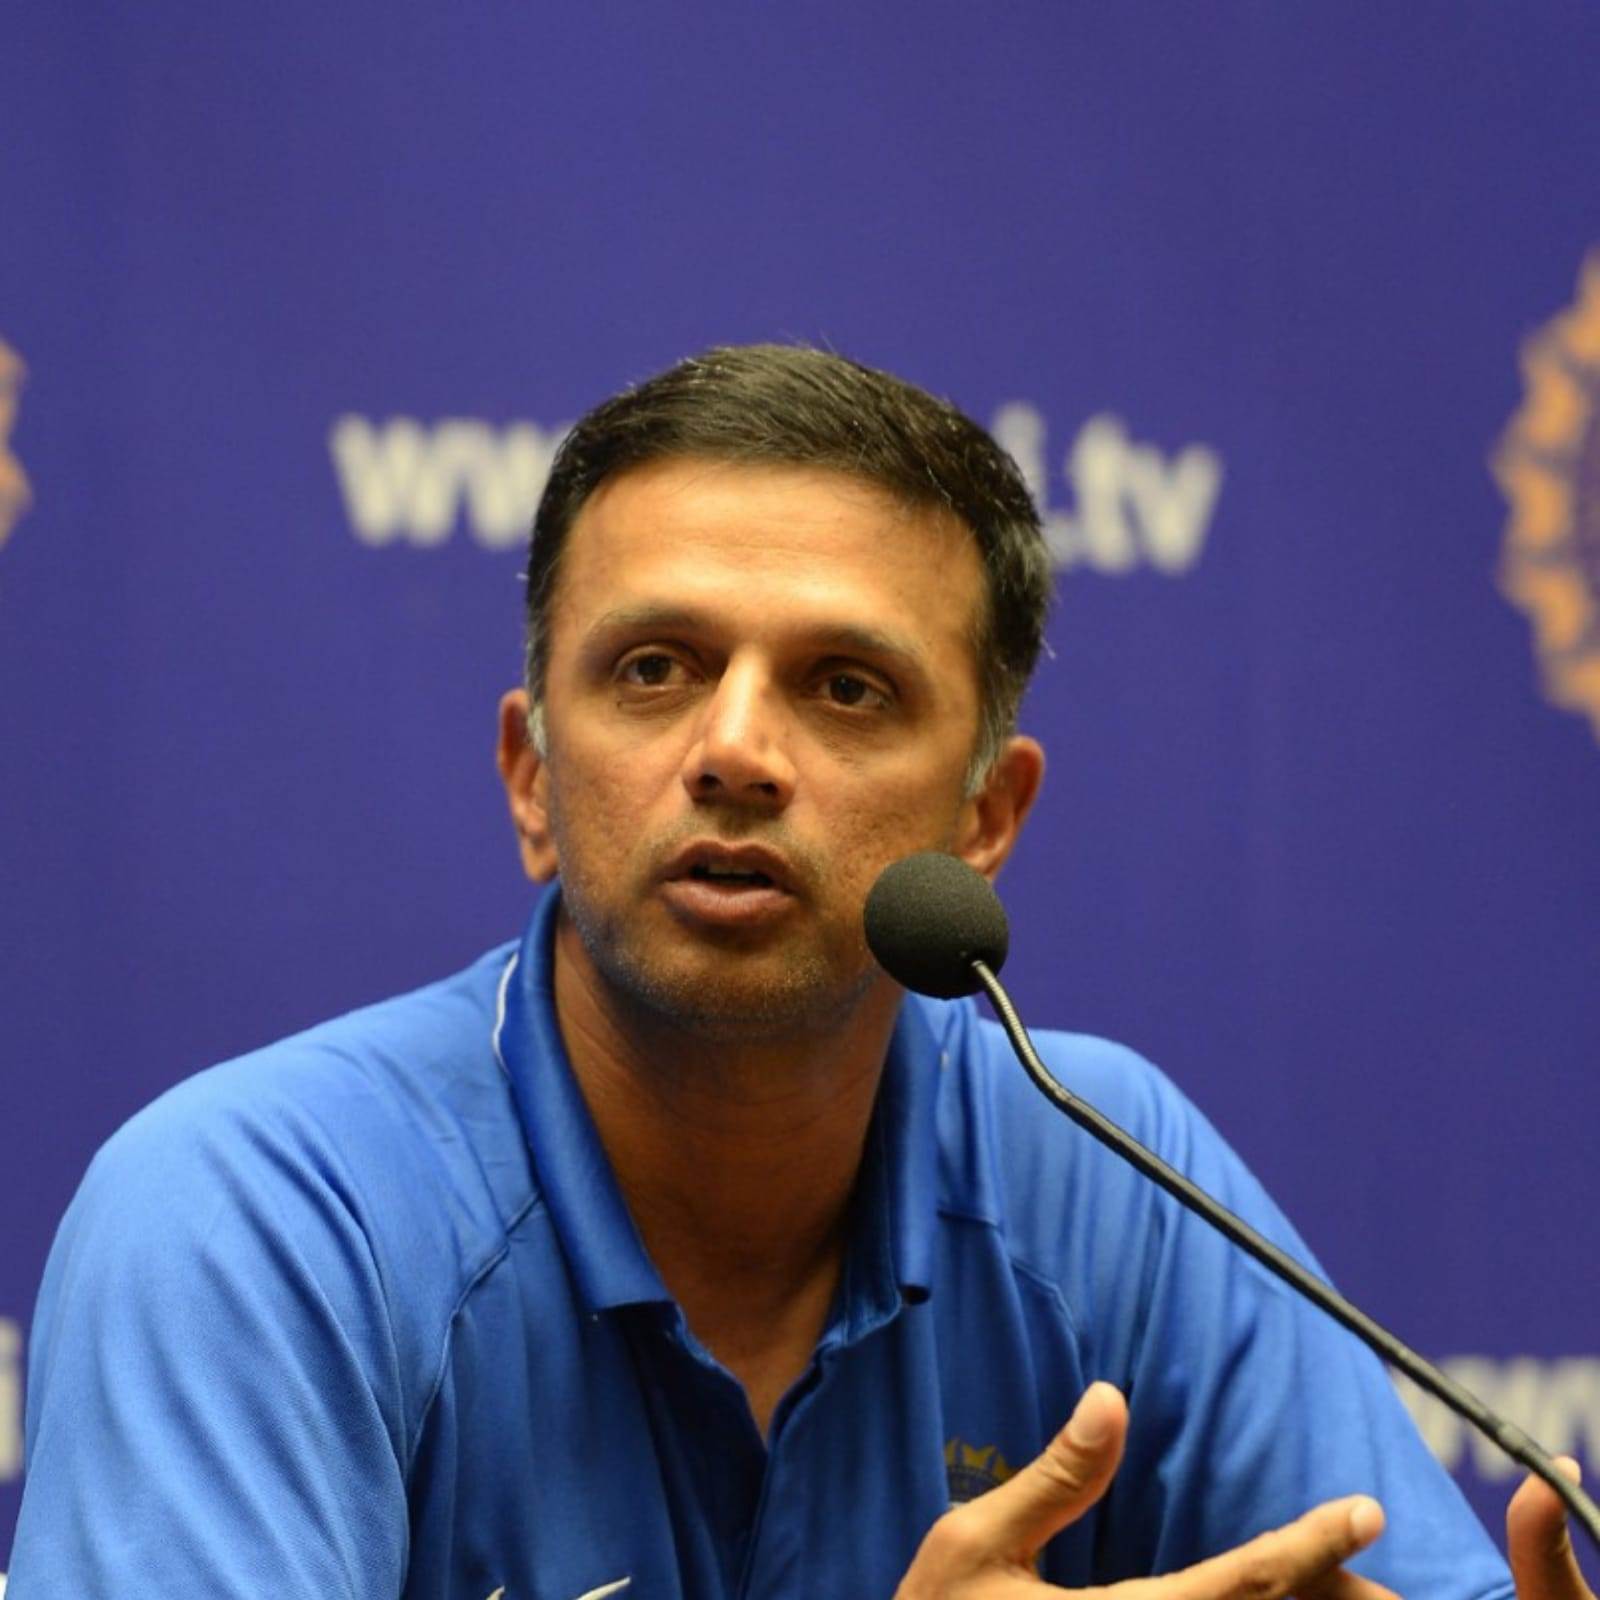 Rahul Dravid: The new Head Coach of Team India.